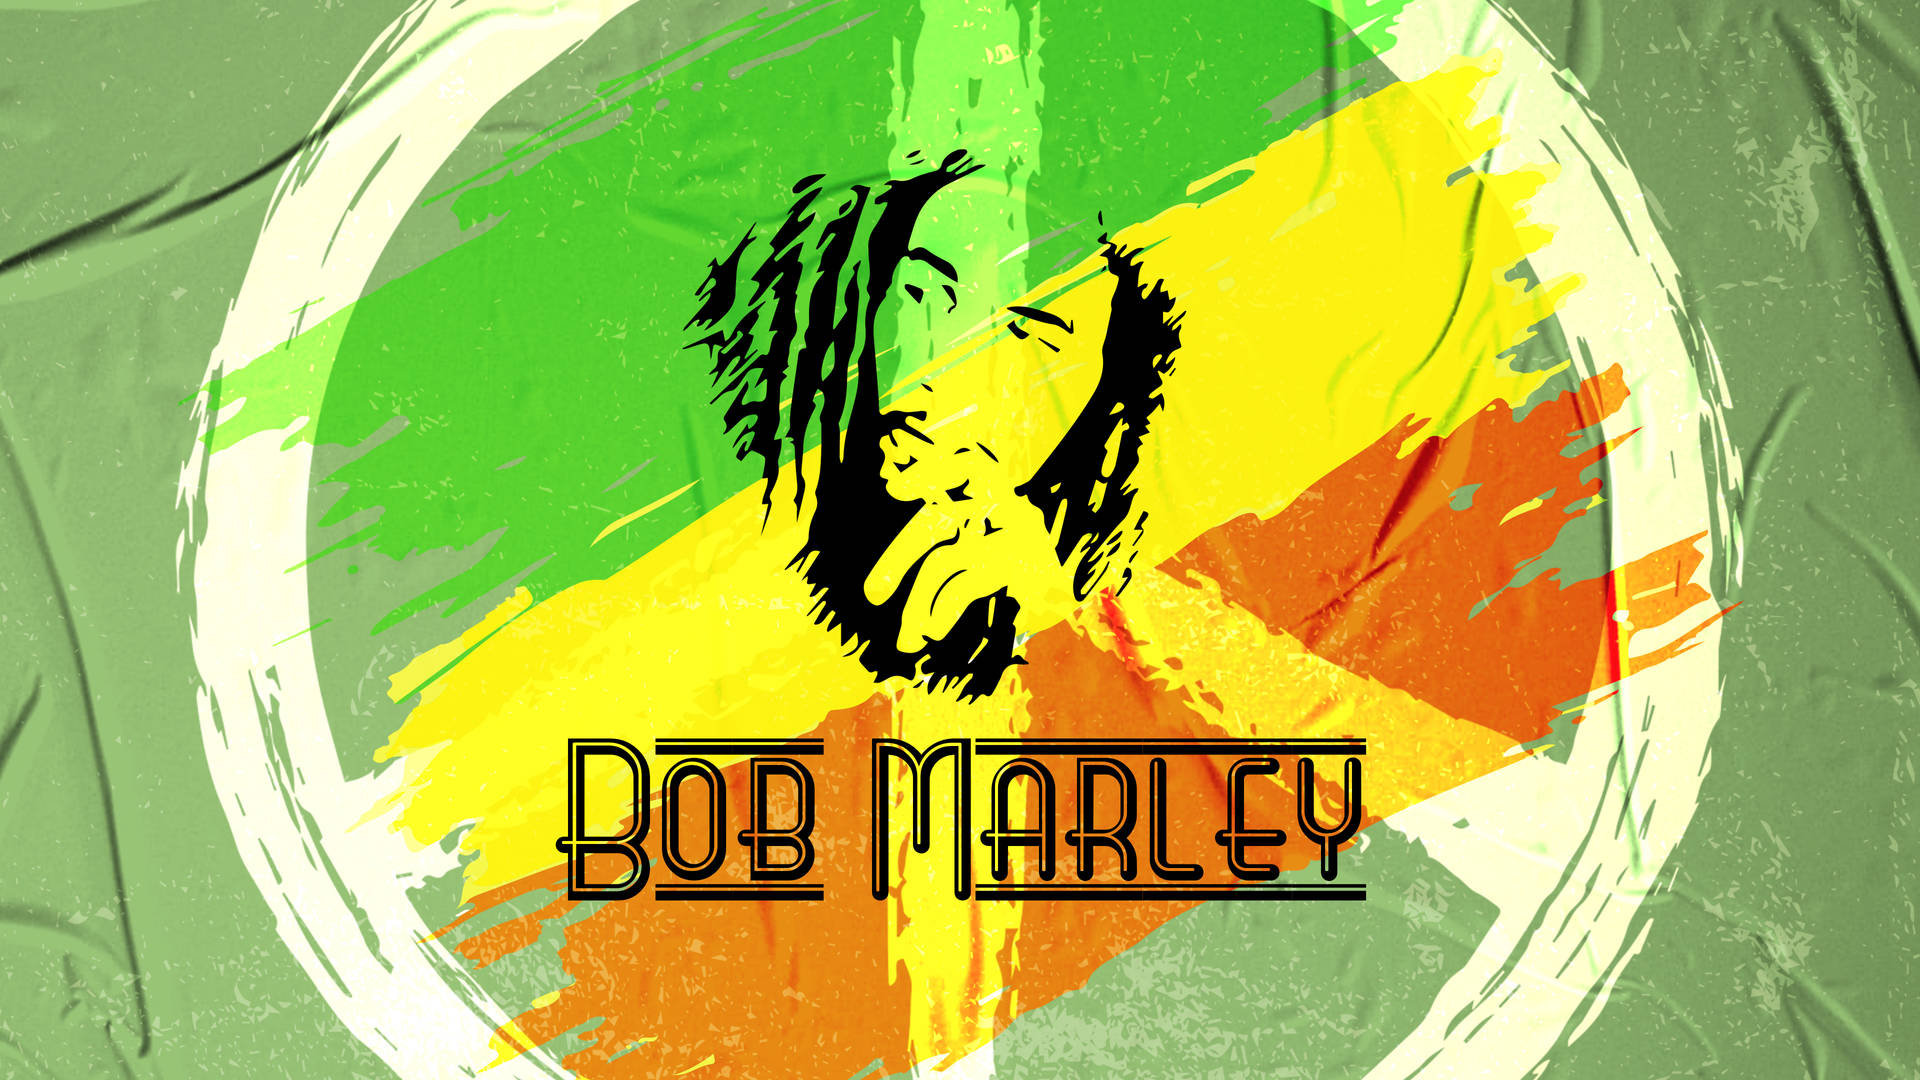 100+] Reggae Background s | Wallpapers.com